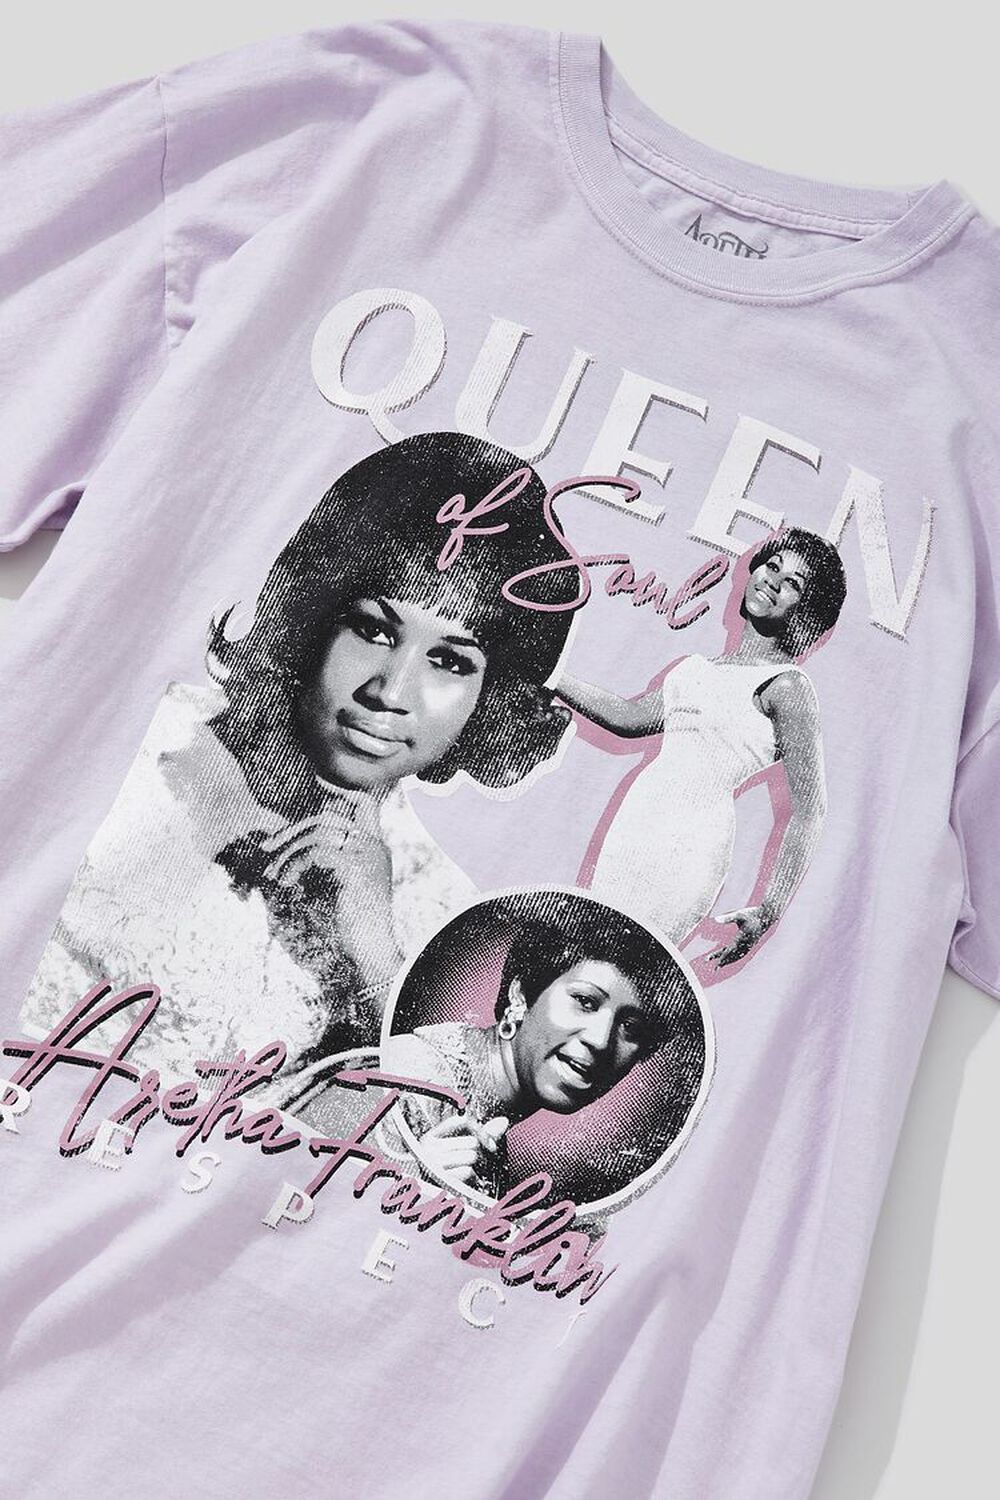  Aretha Franklin T Shirt Queen of Soul Singer Concert